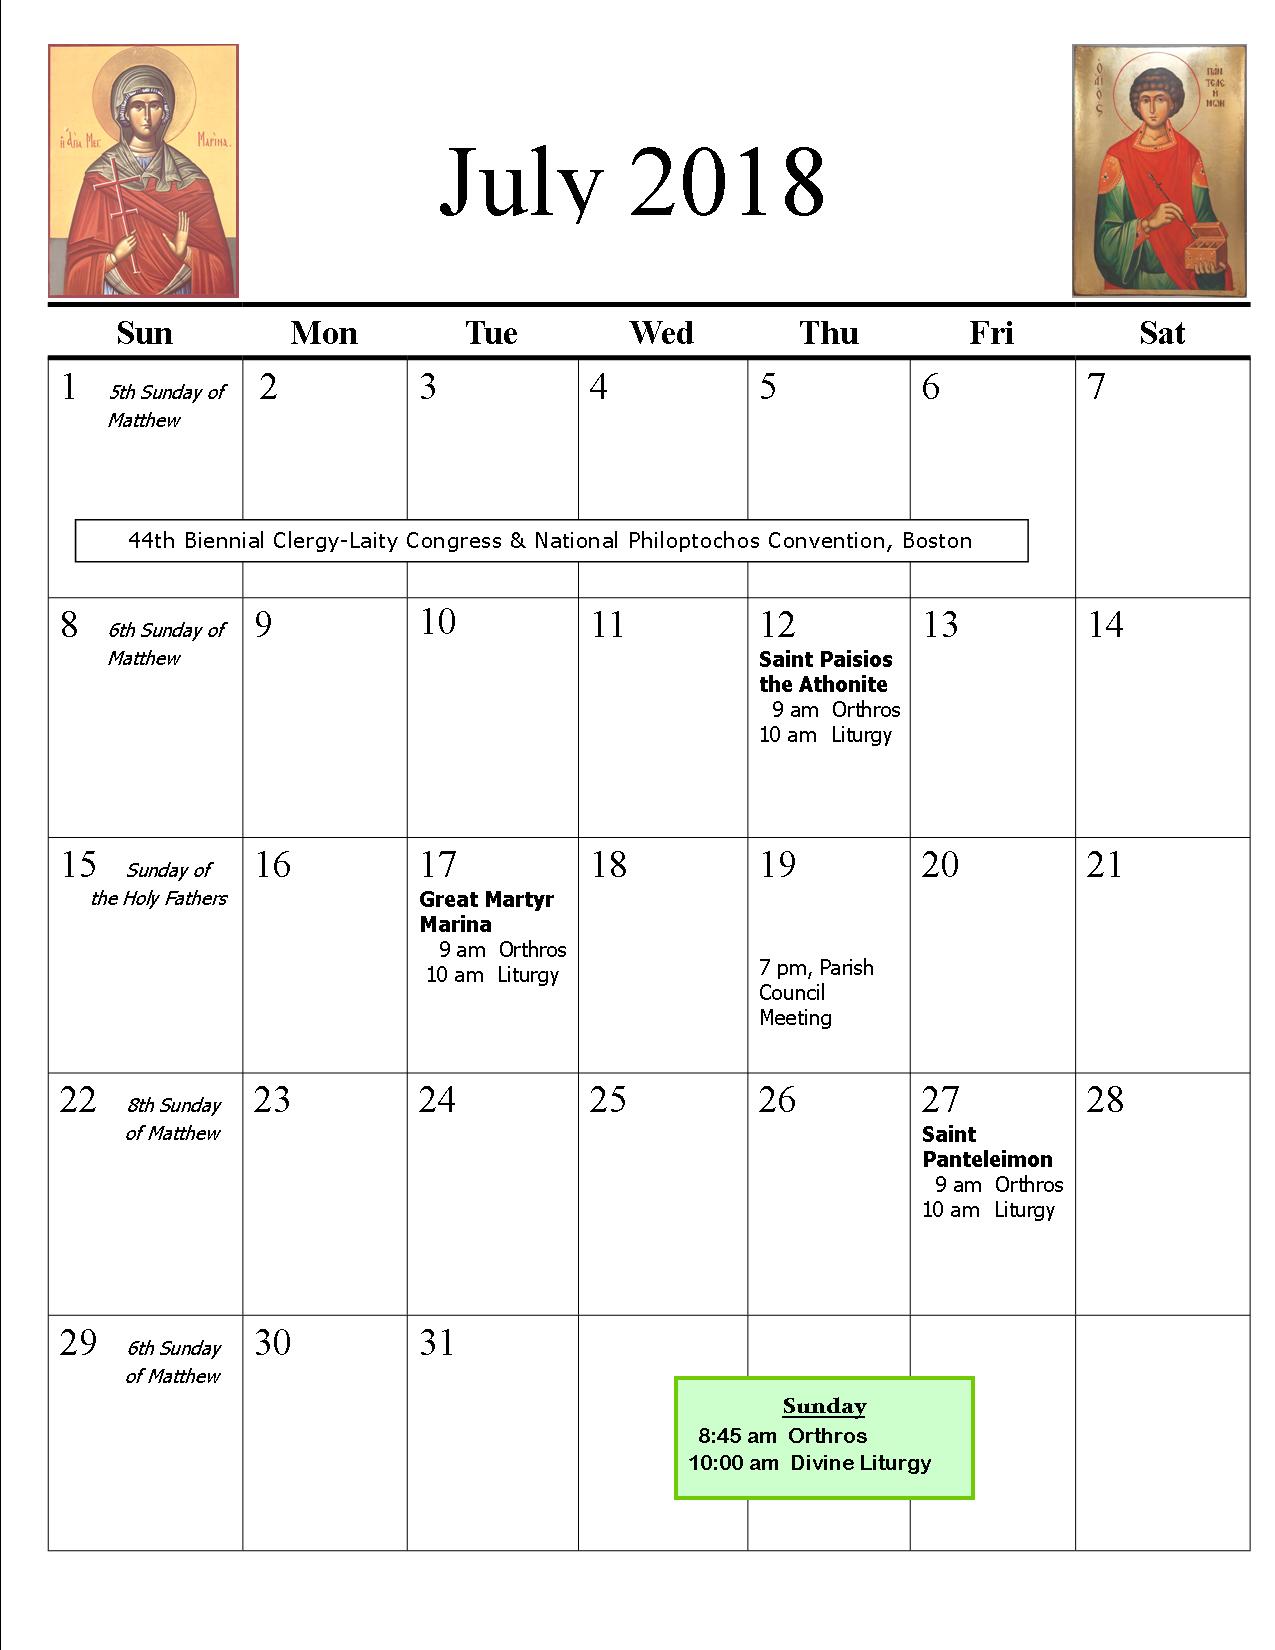 July 2018 Lamplighter Calendar added St Paisios DL